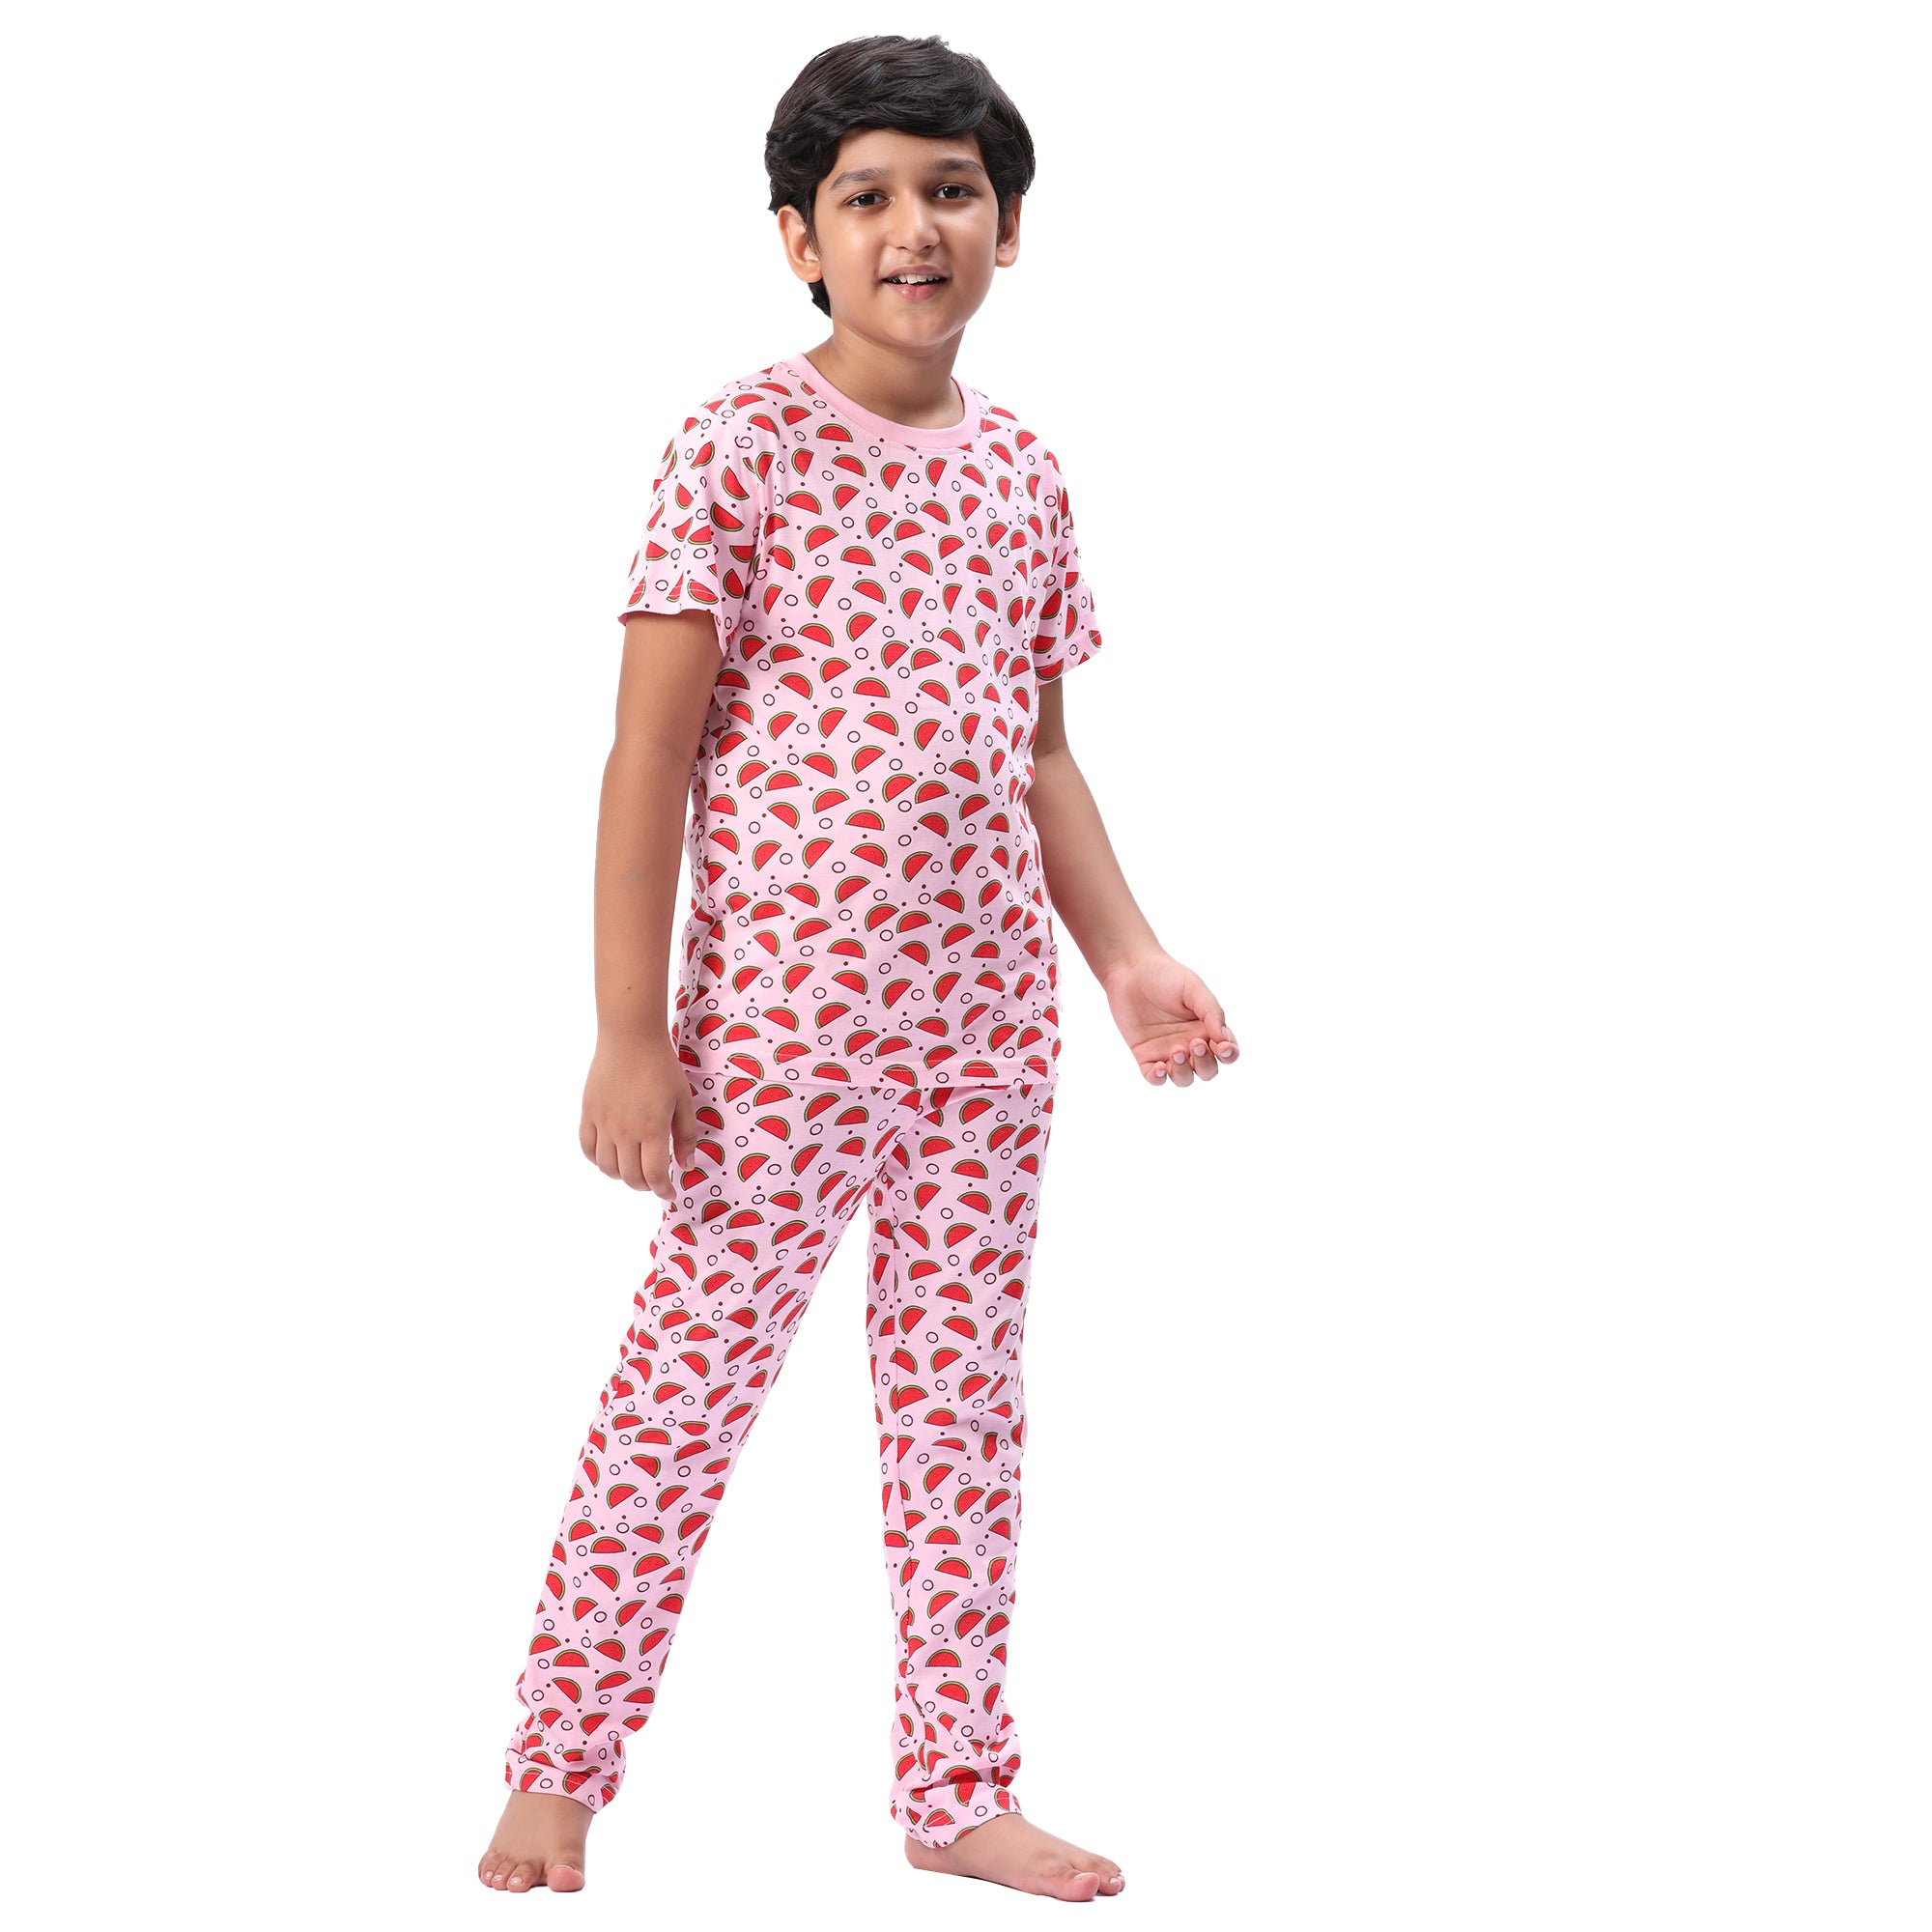 Poomer Kidssy Pyjama Set Combo 1